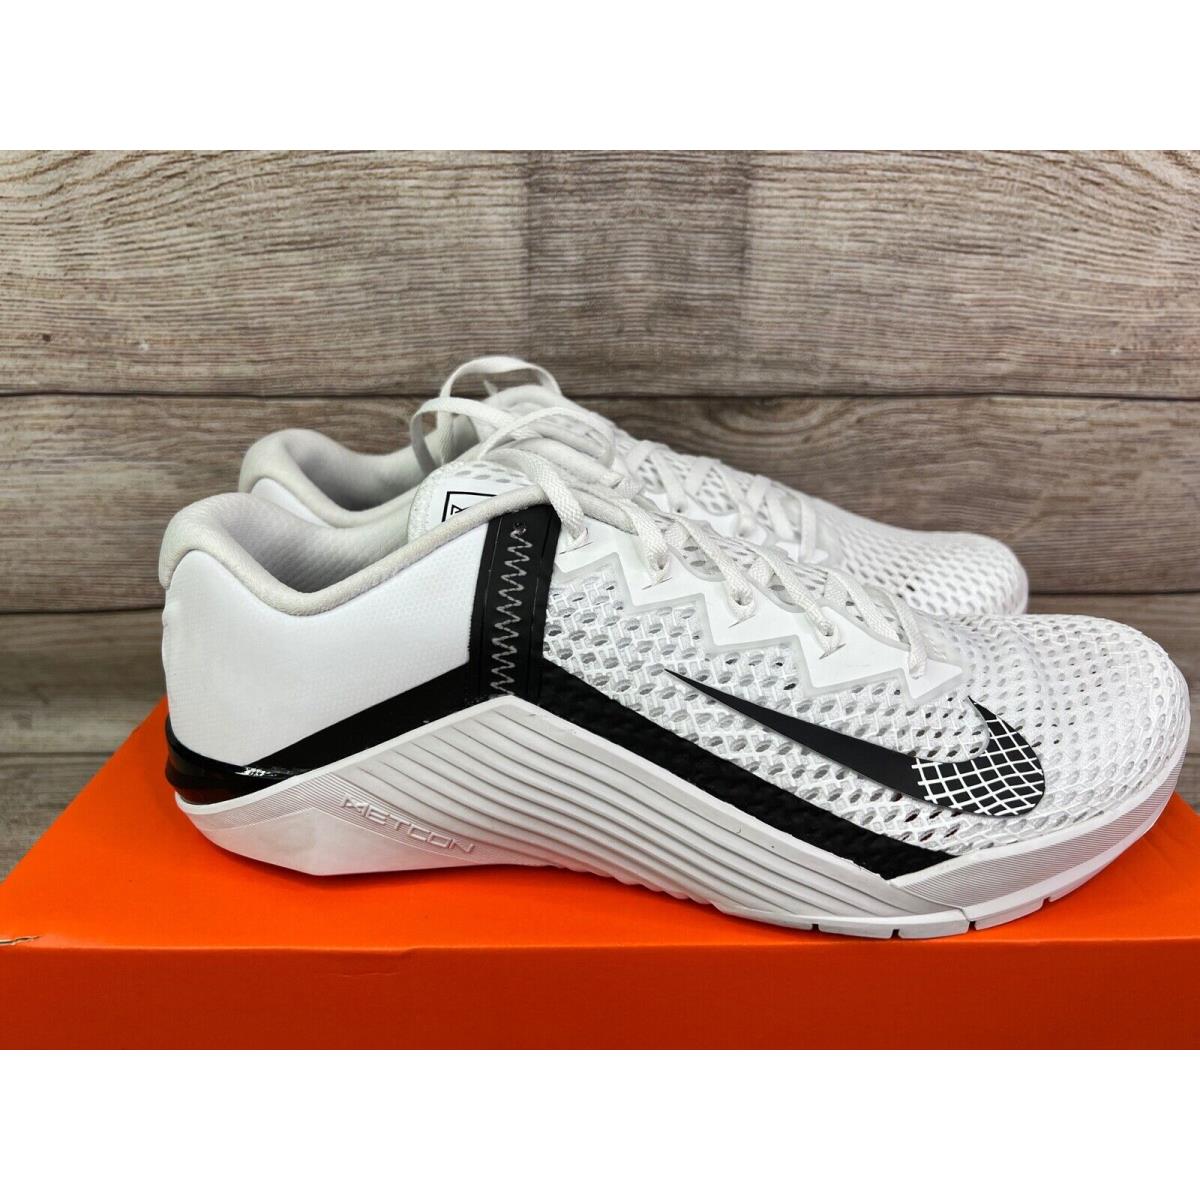 Nike Metcon 6 Cross Training Mens Trainers Shoes White Black CK9388-100